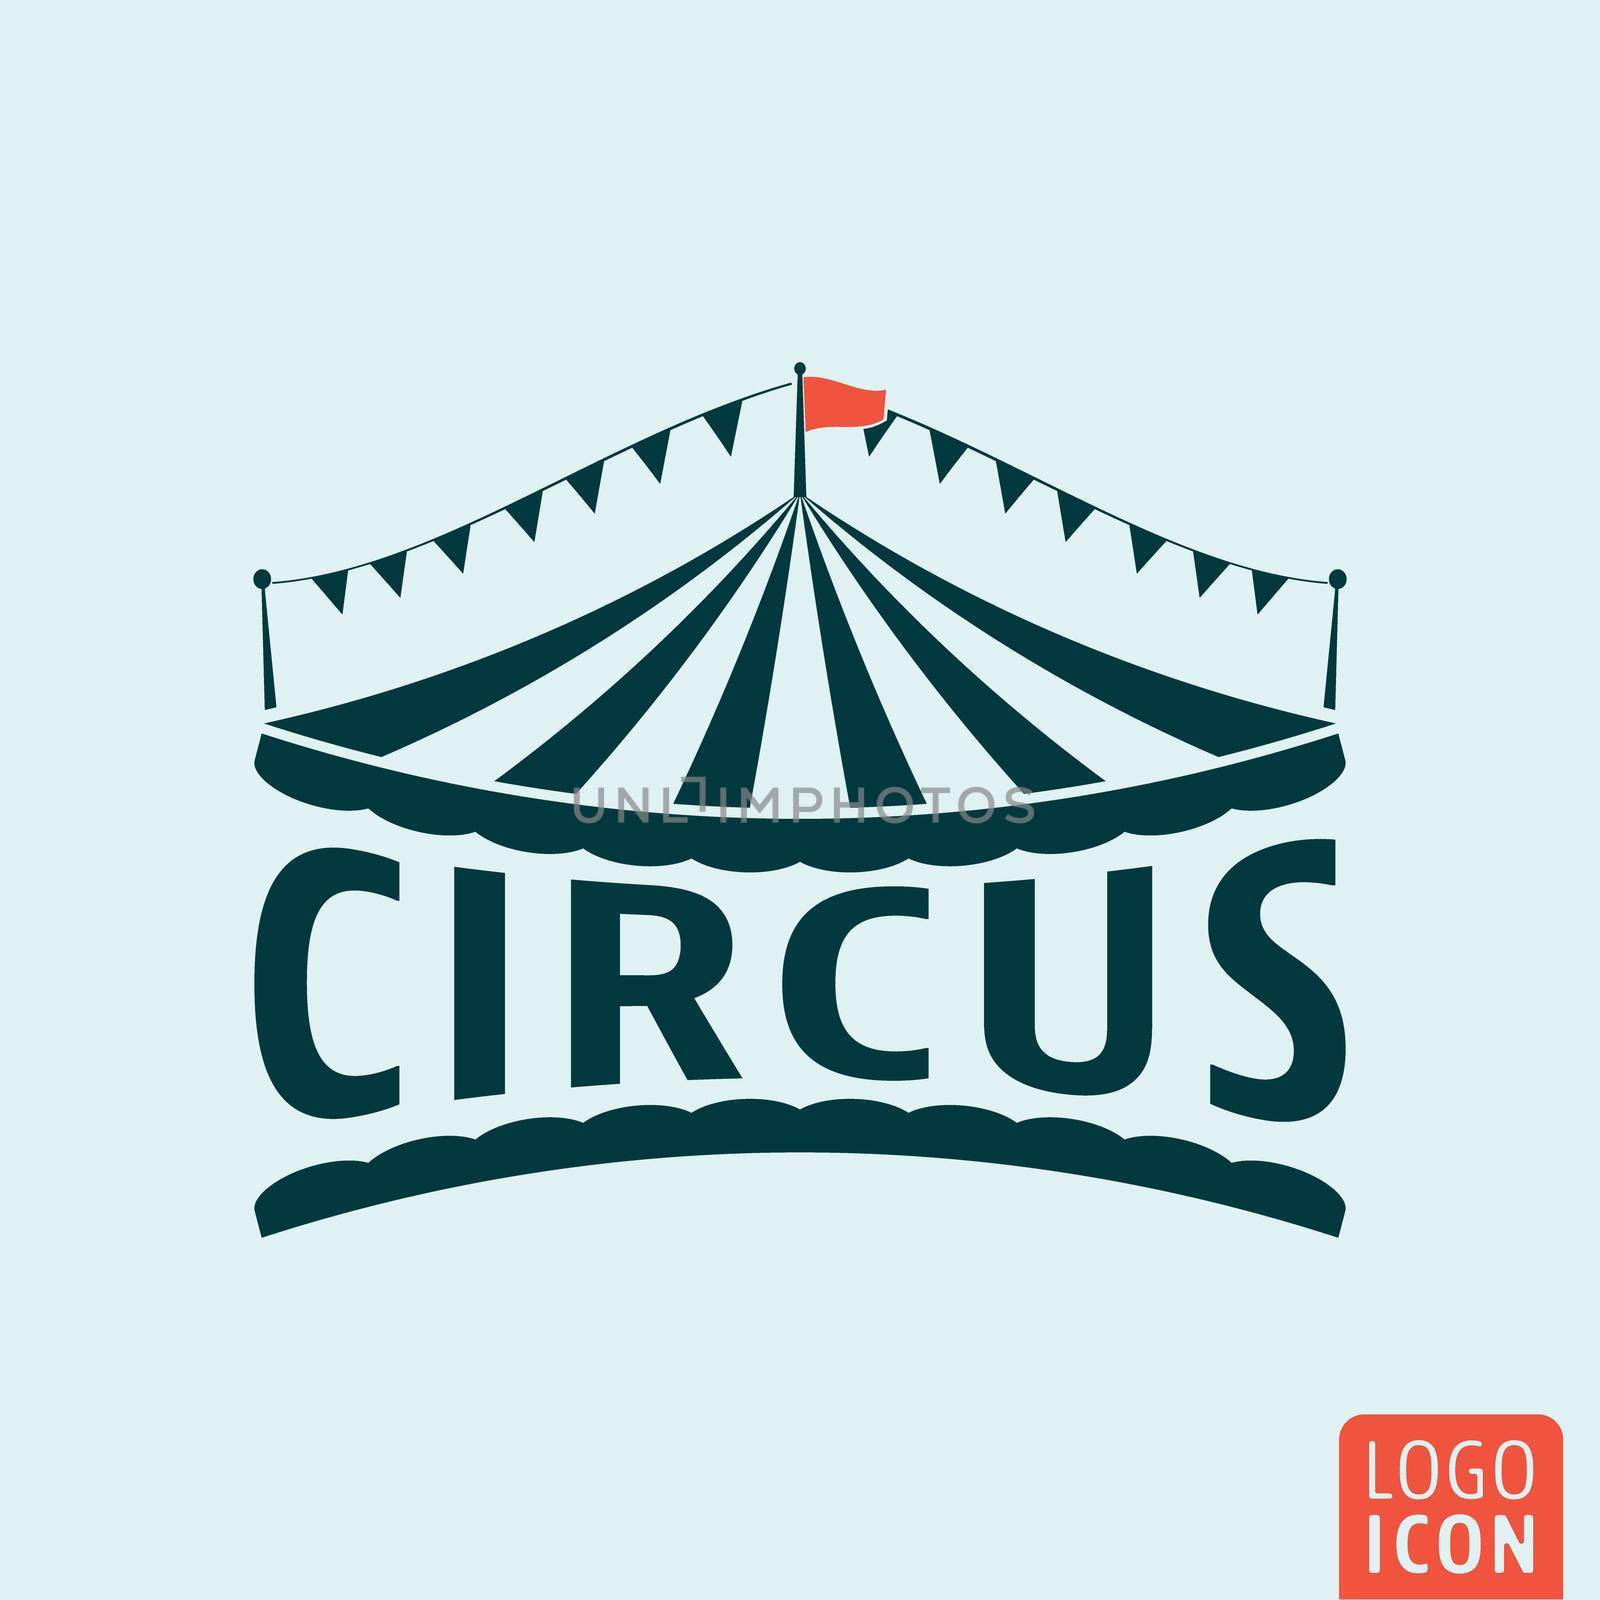 Circus icon. Circus tent symbol. Vector illustration